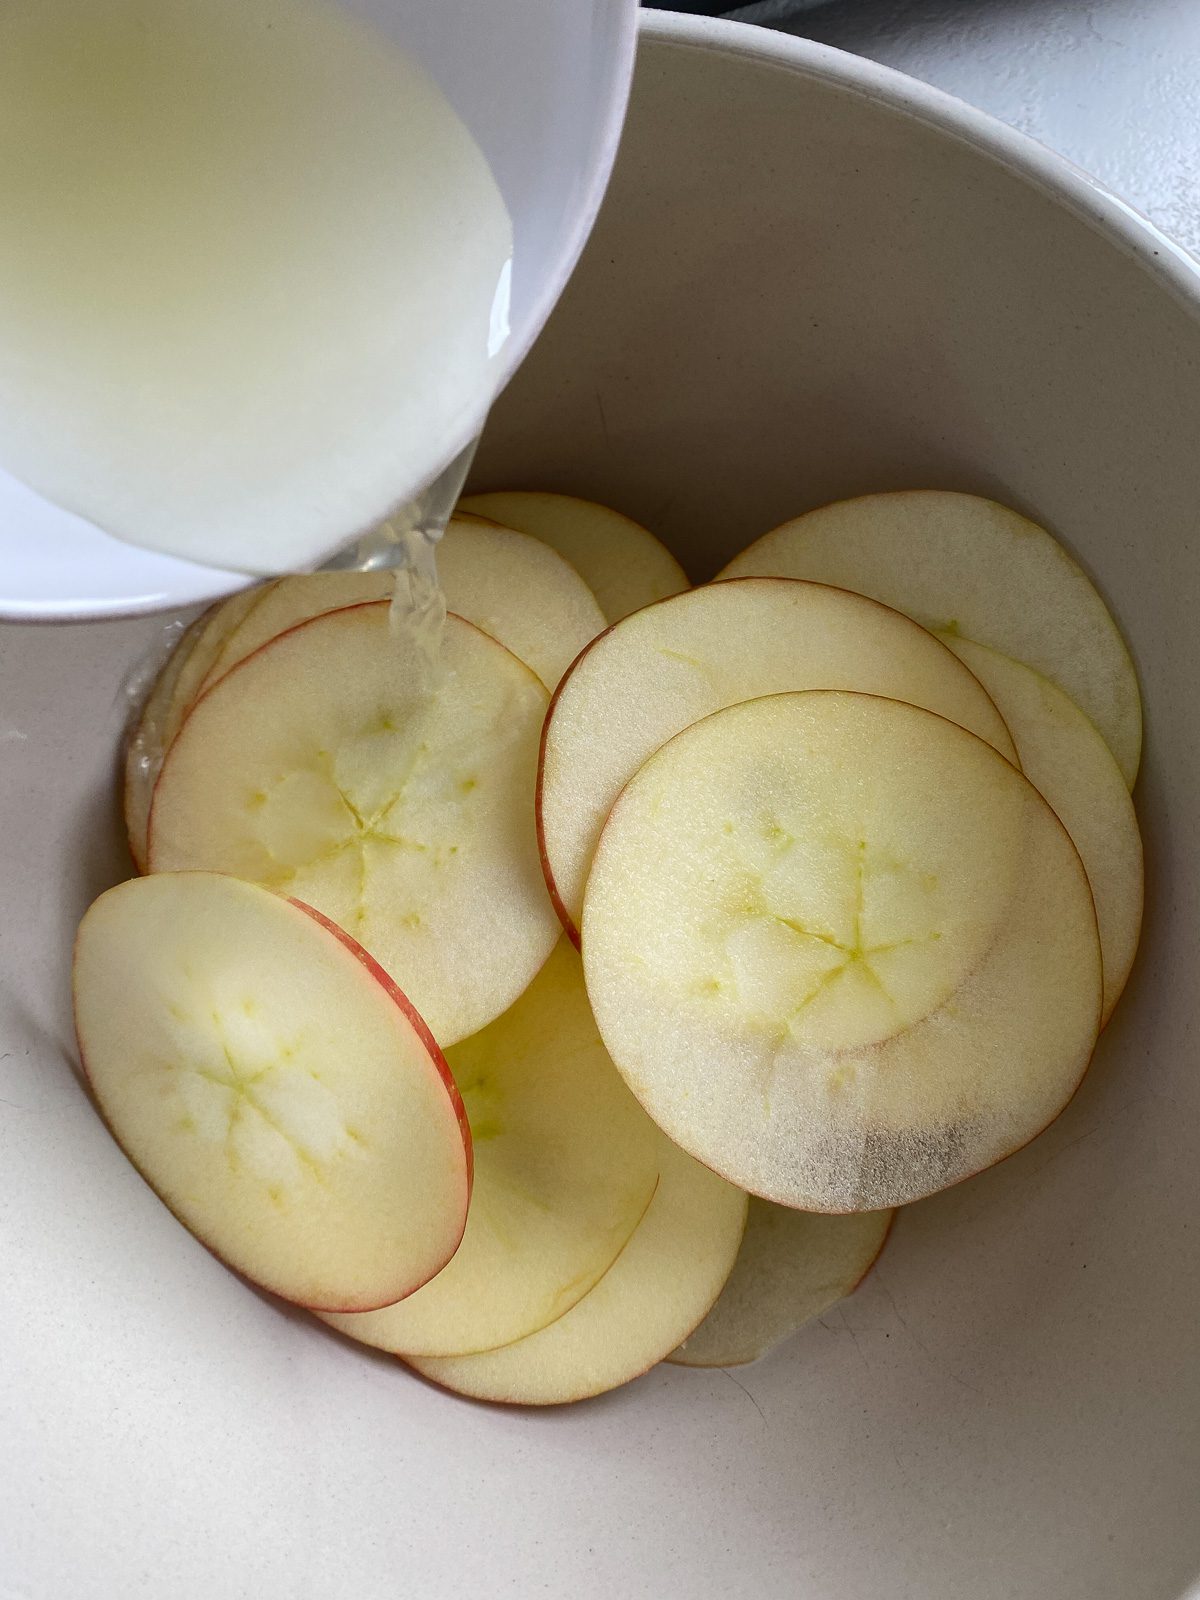 process shot of adding lemon juice to sliced apples in white bowl